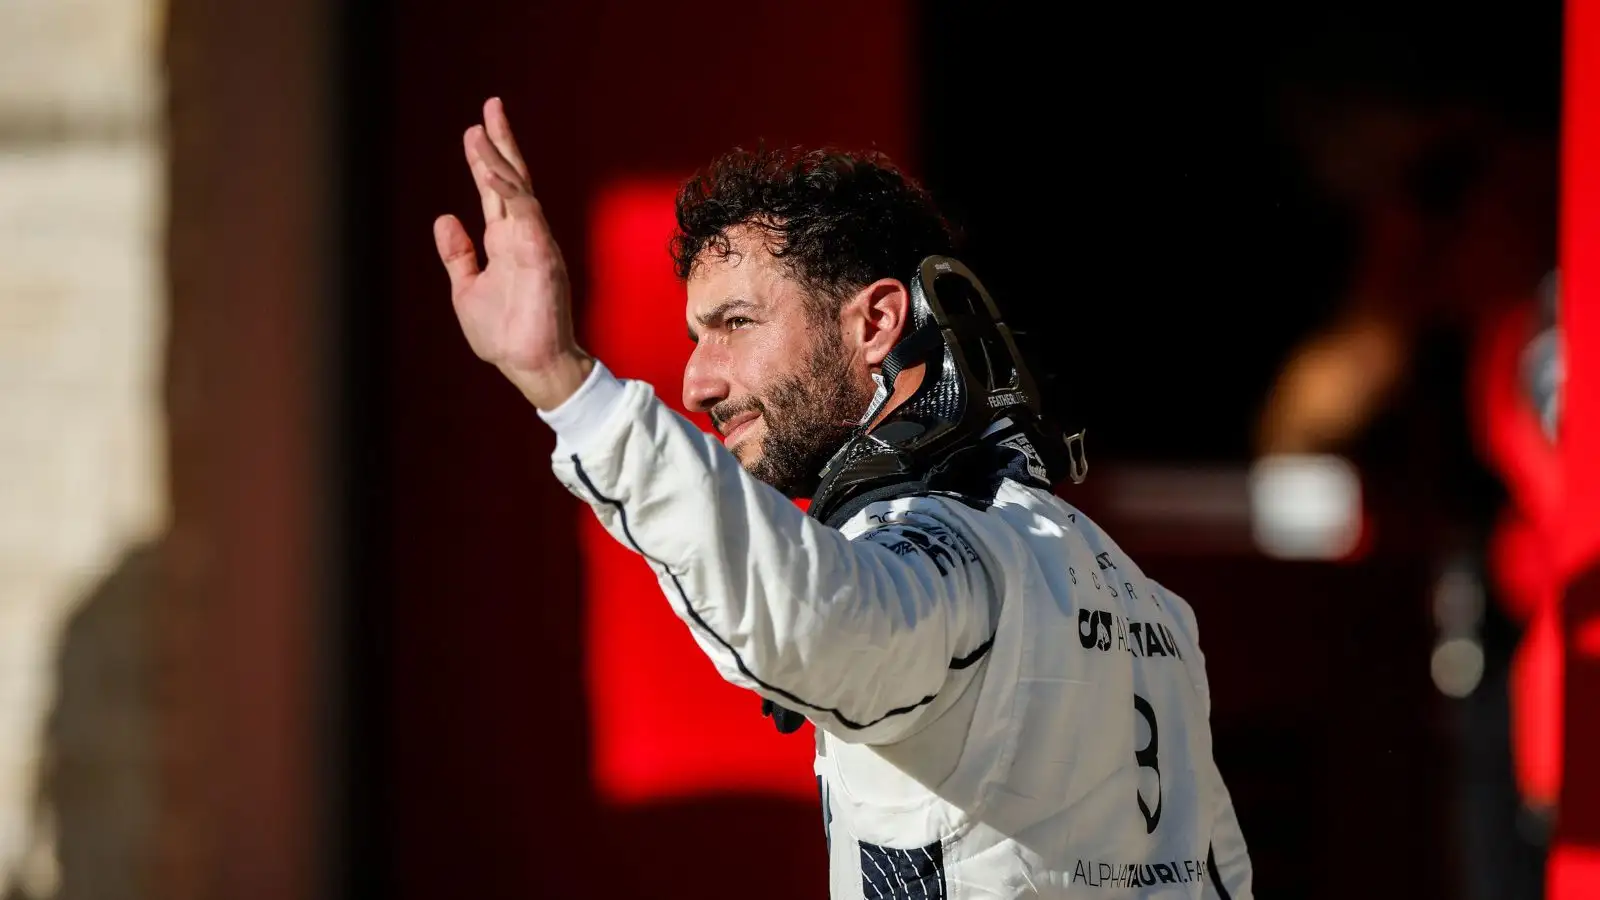 AlphaTauri driver Daniel Ricciardo waves to the fans after qualifying.